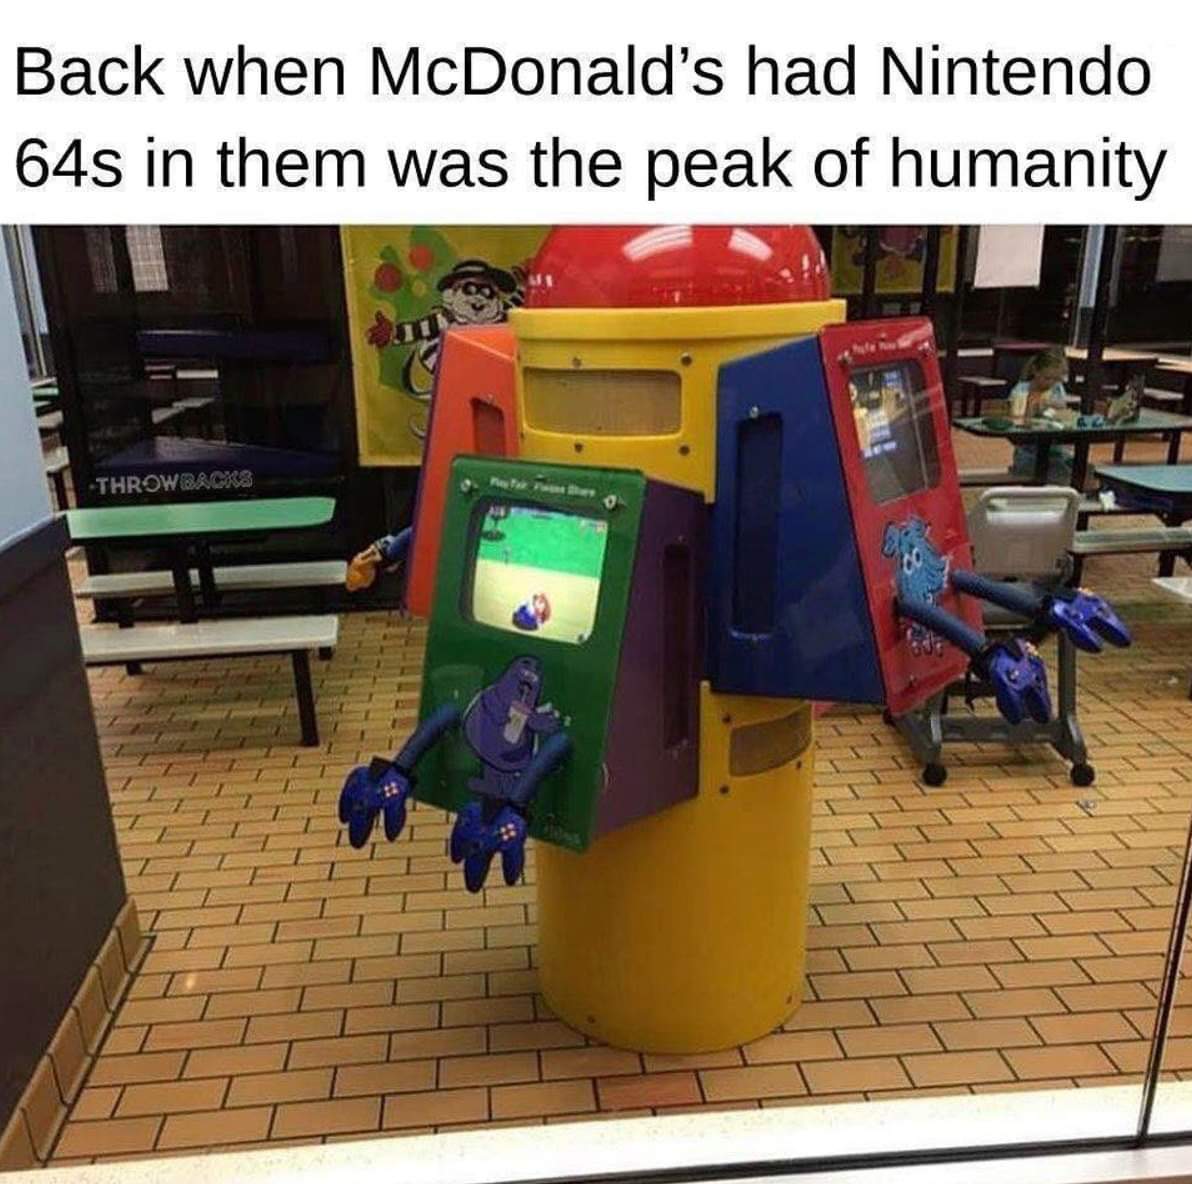 mcdonalds nintendo 64 - Back when McDonald's had Nintendo 64s in them was the peak of humanity Throwbacks EDIT111 1111111 1 1 1 1 1 Inn 1 V11 Vii Nnn Innnnn Nnnnnn Nnnnnnnnnn